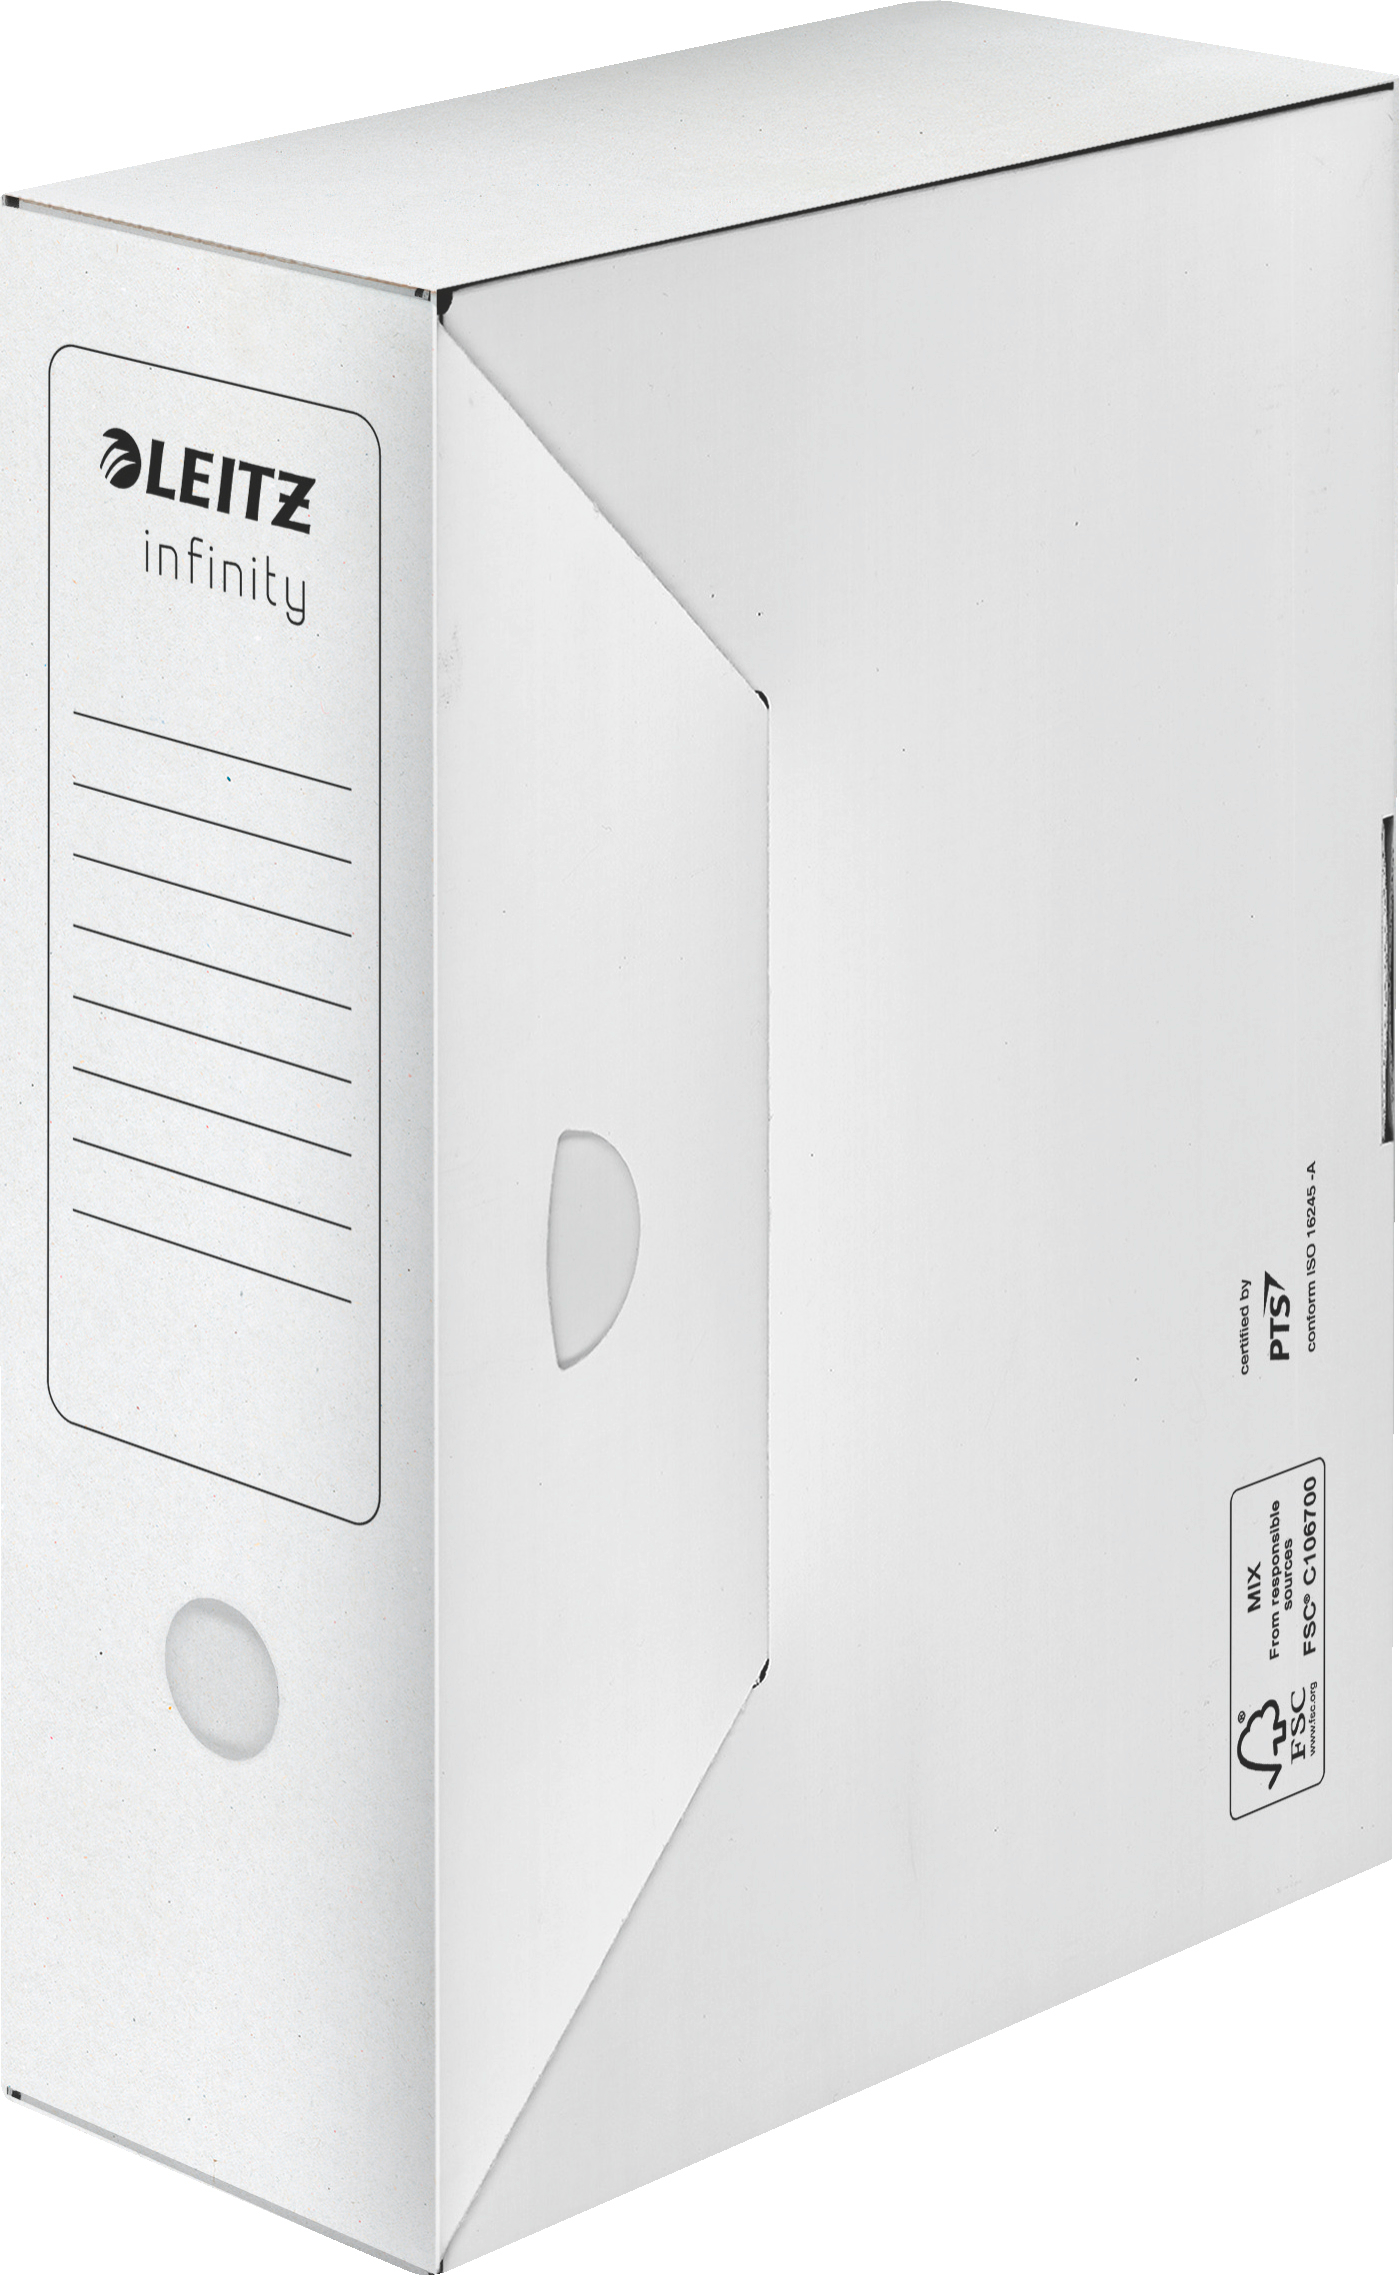 LEITZ Infinity boîte d'archive 60890000 blanc 330x100x255mm